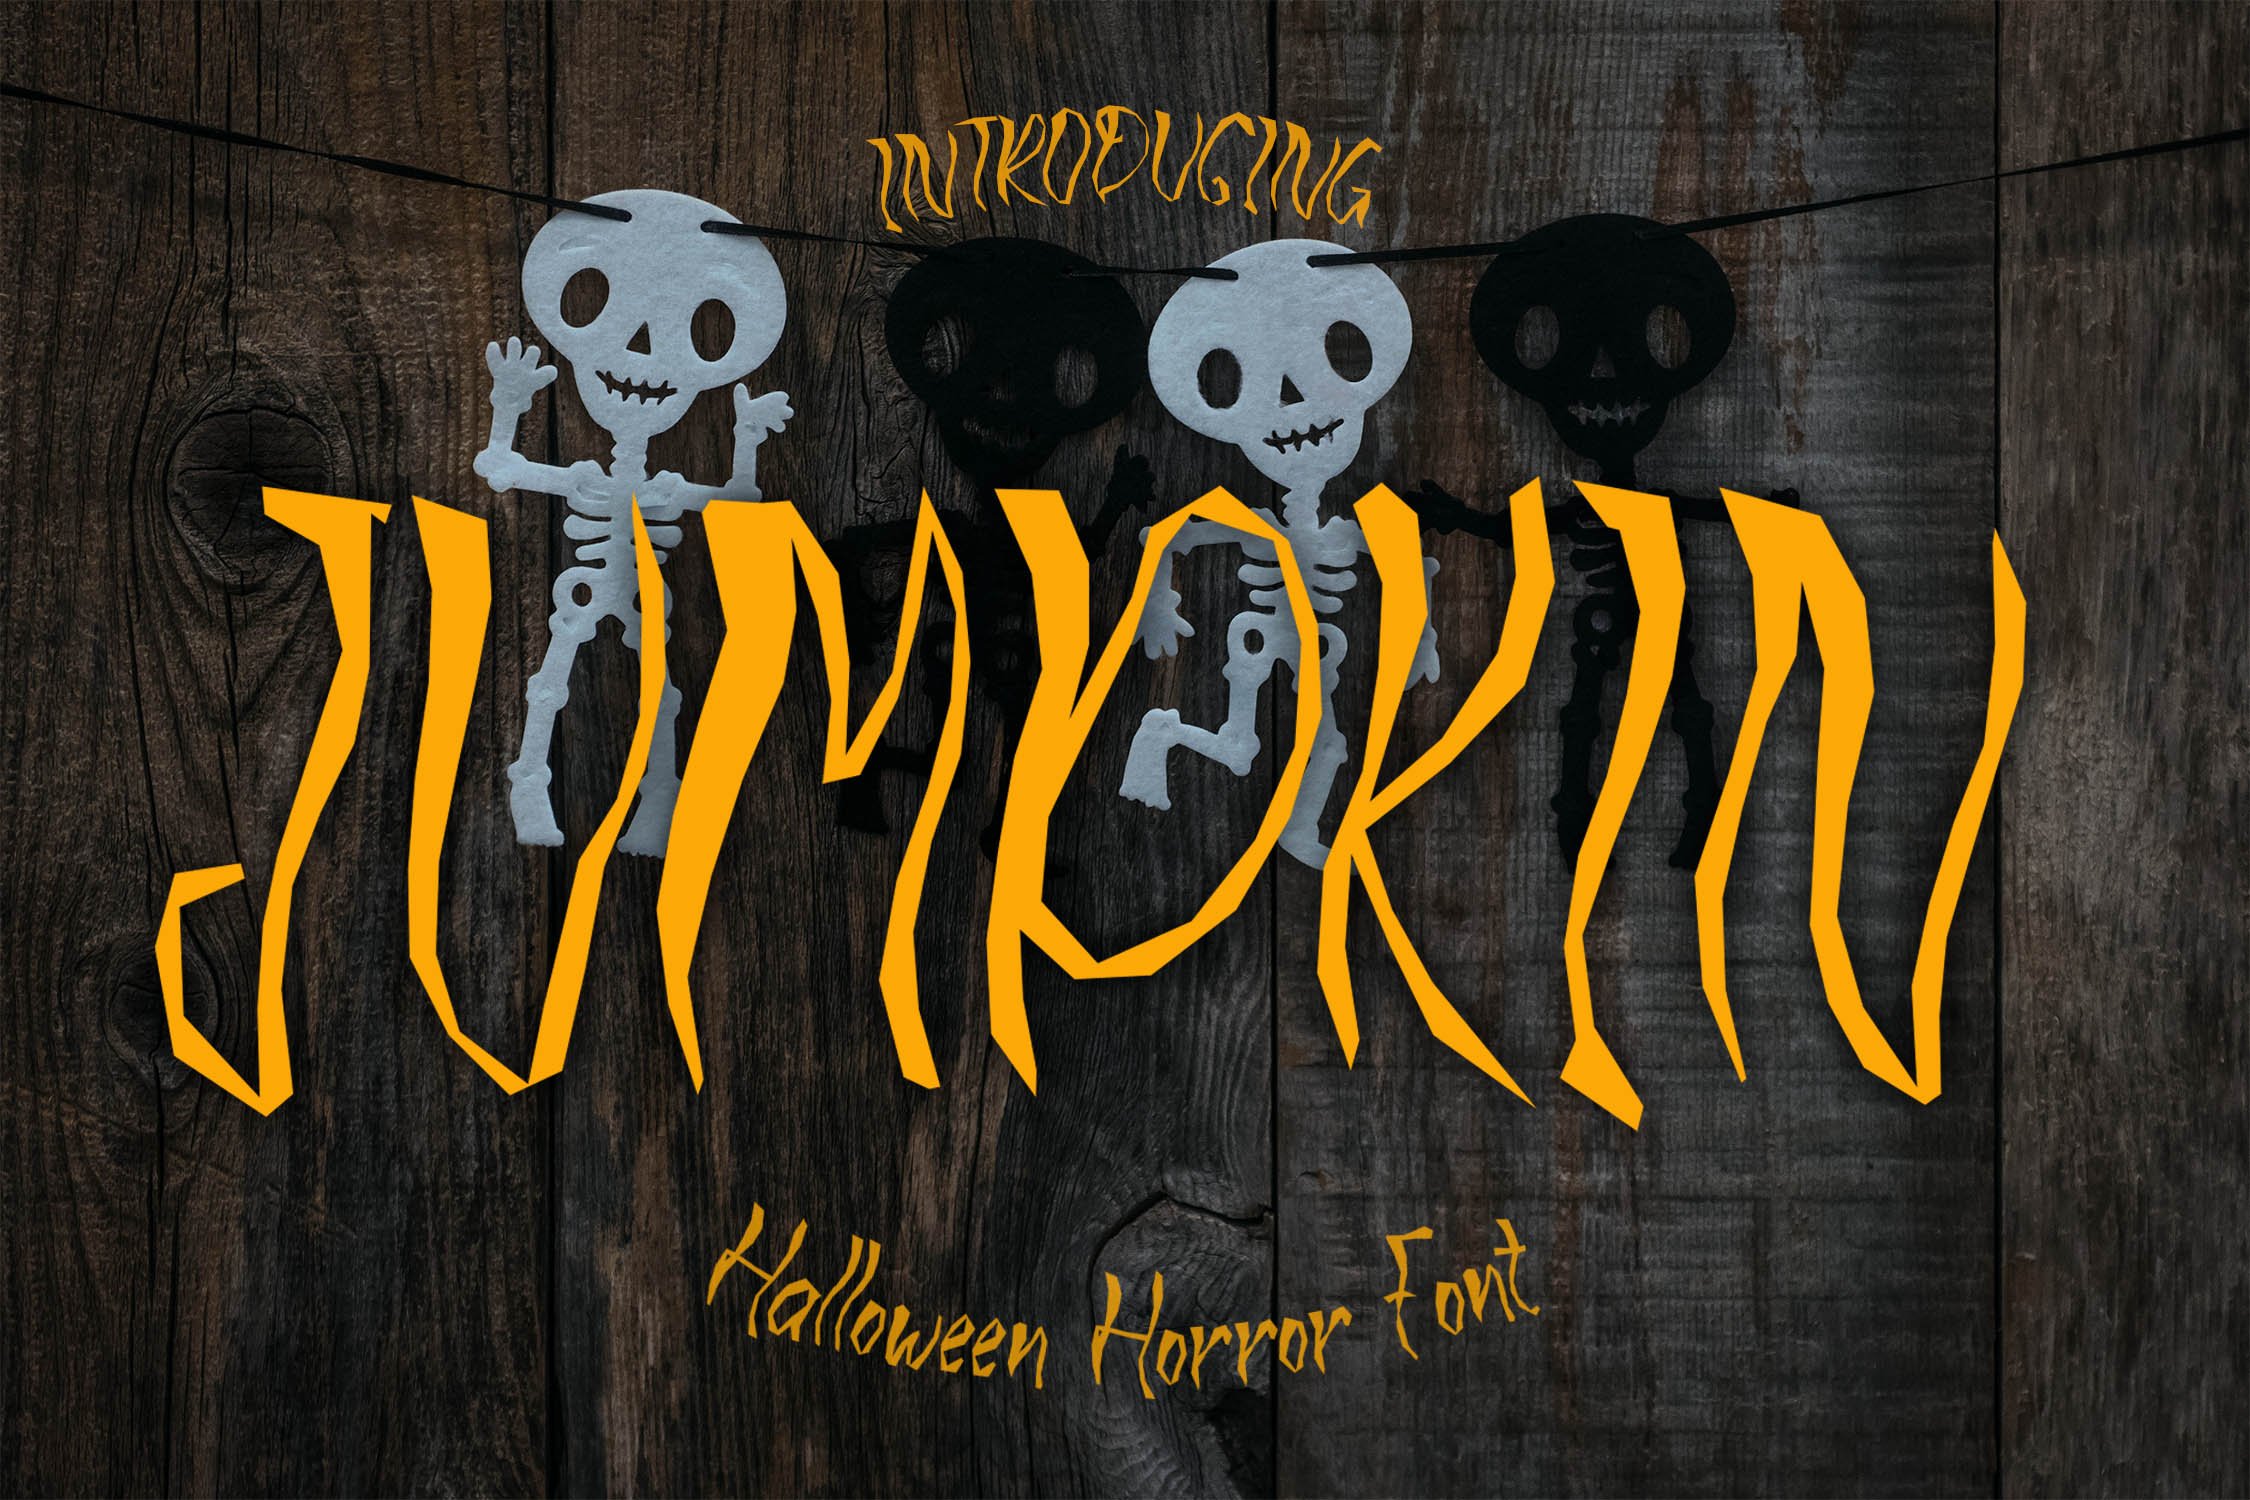 JUMPKIN - Halloween Horror Font cover image.